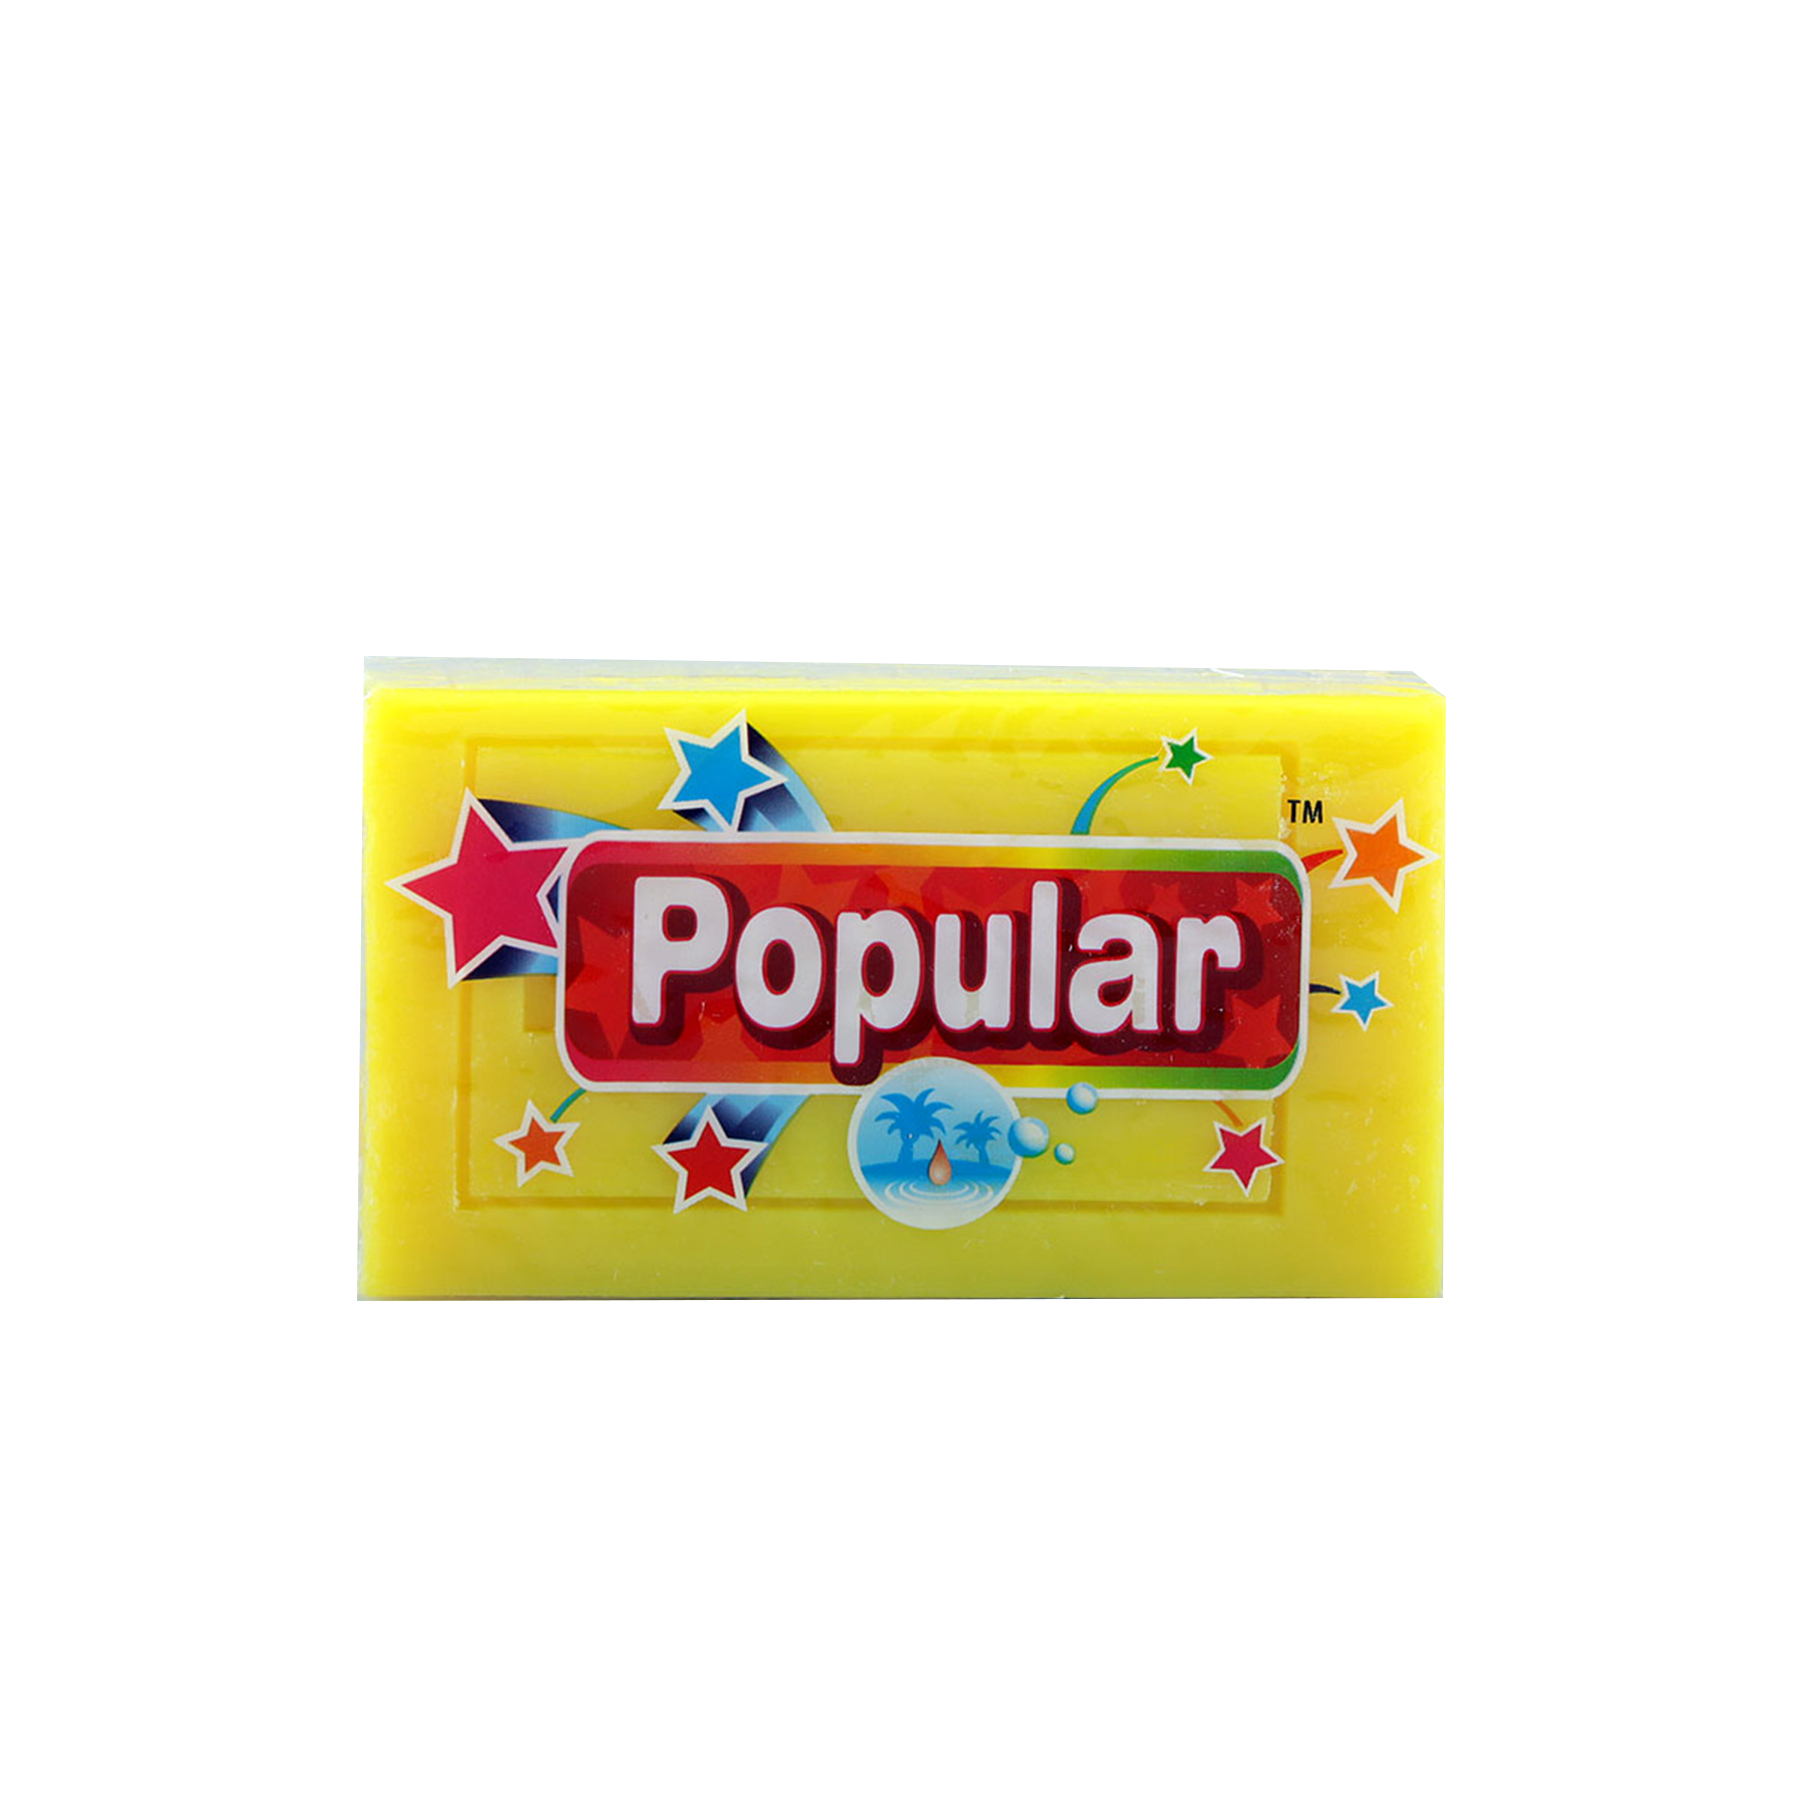 Popular эдийн саван шар 150гр